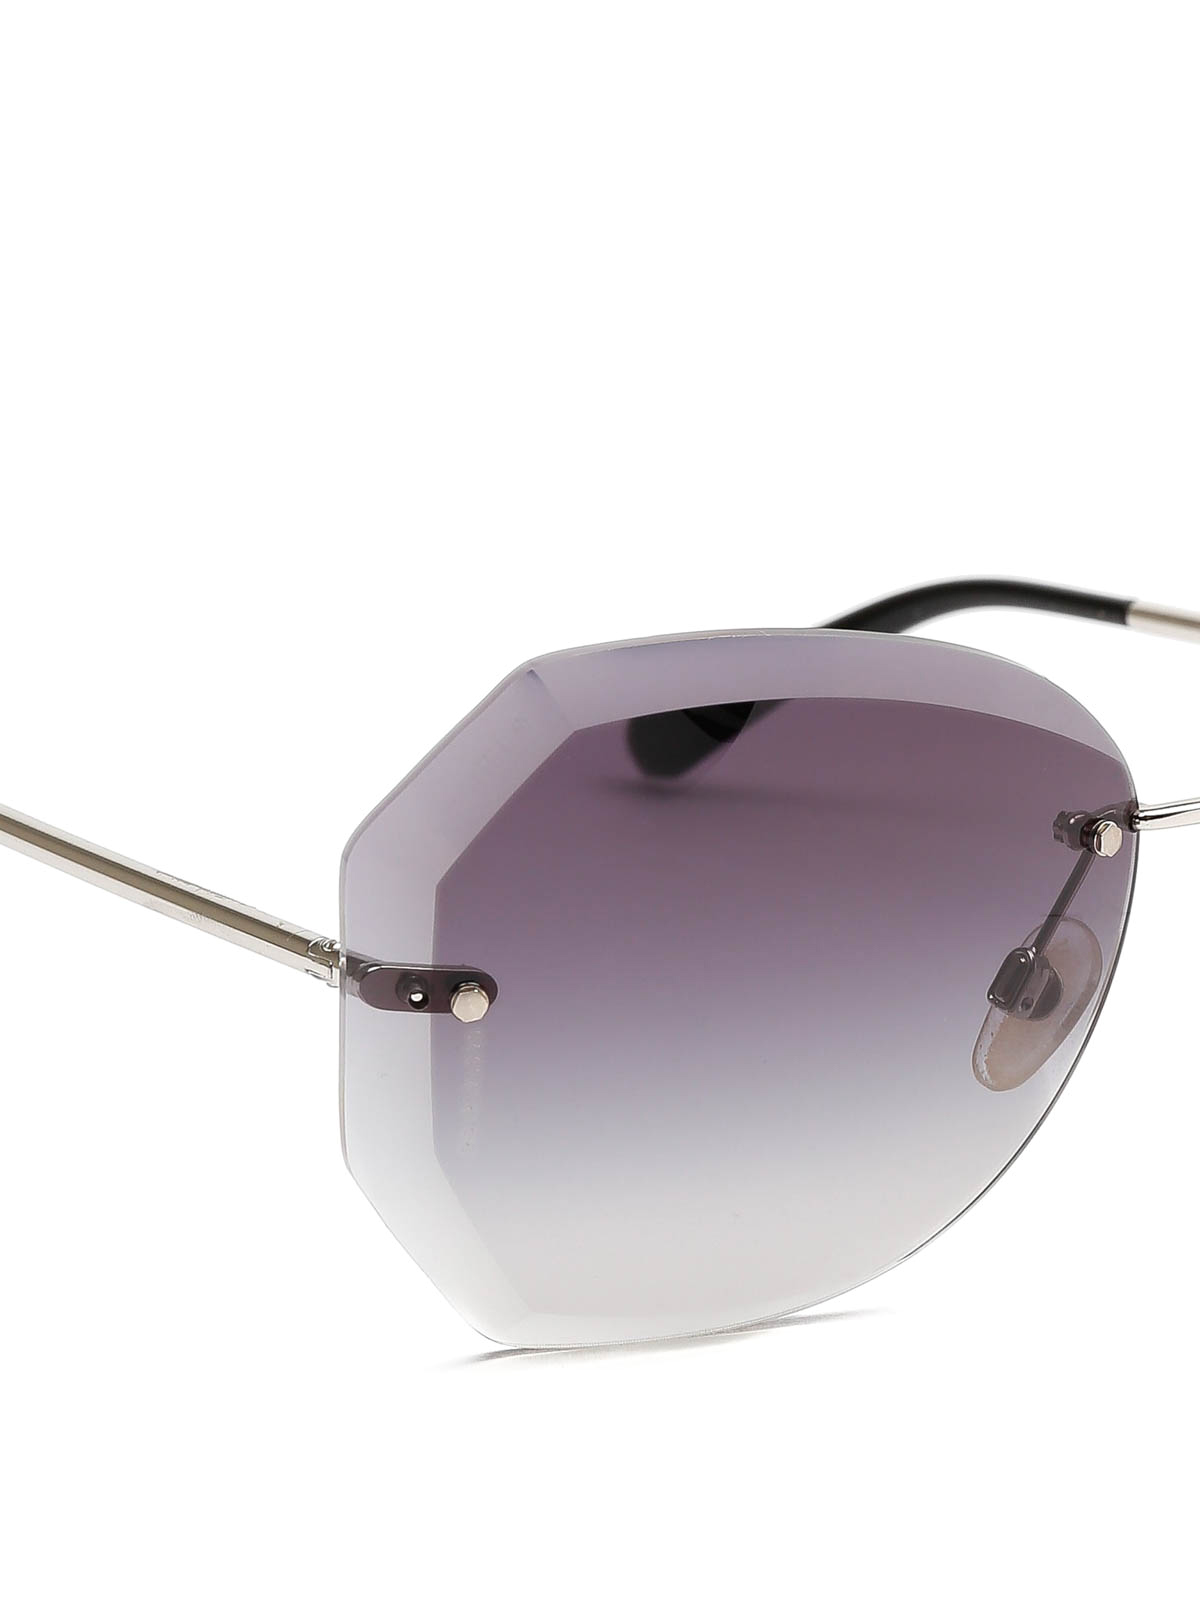 Sunglasses Chanel - Rimless round sunglasses - CH4220C1243C